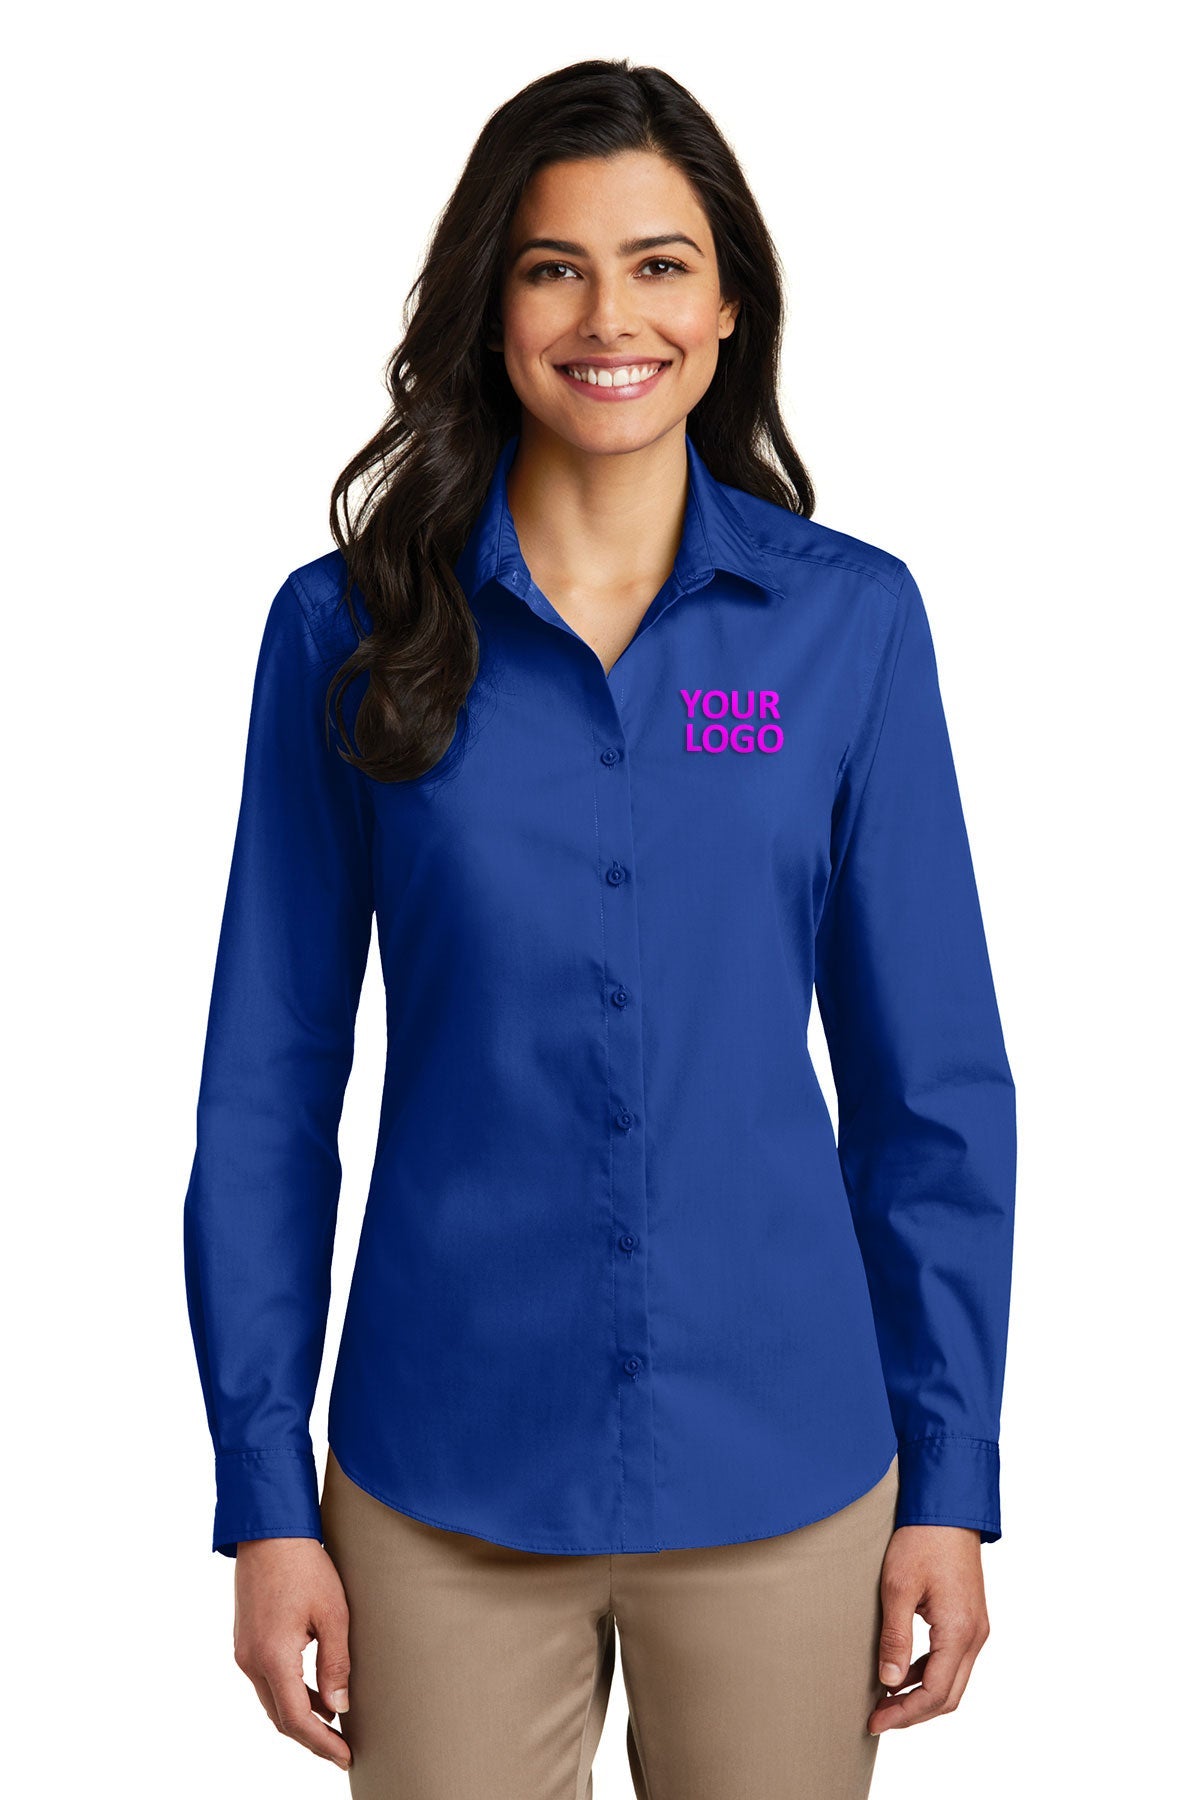 Port Authority True Royal LW100 custom work shirts